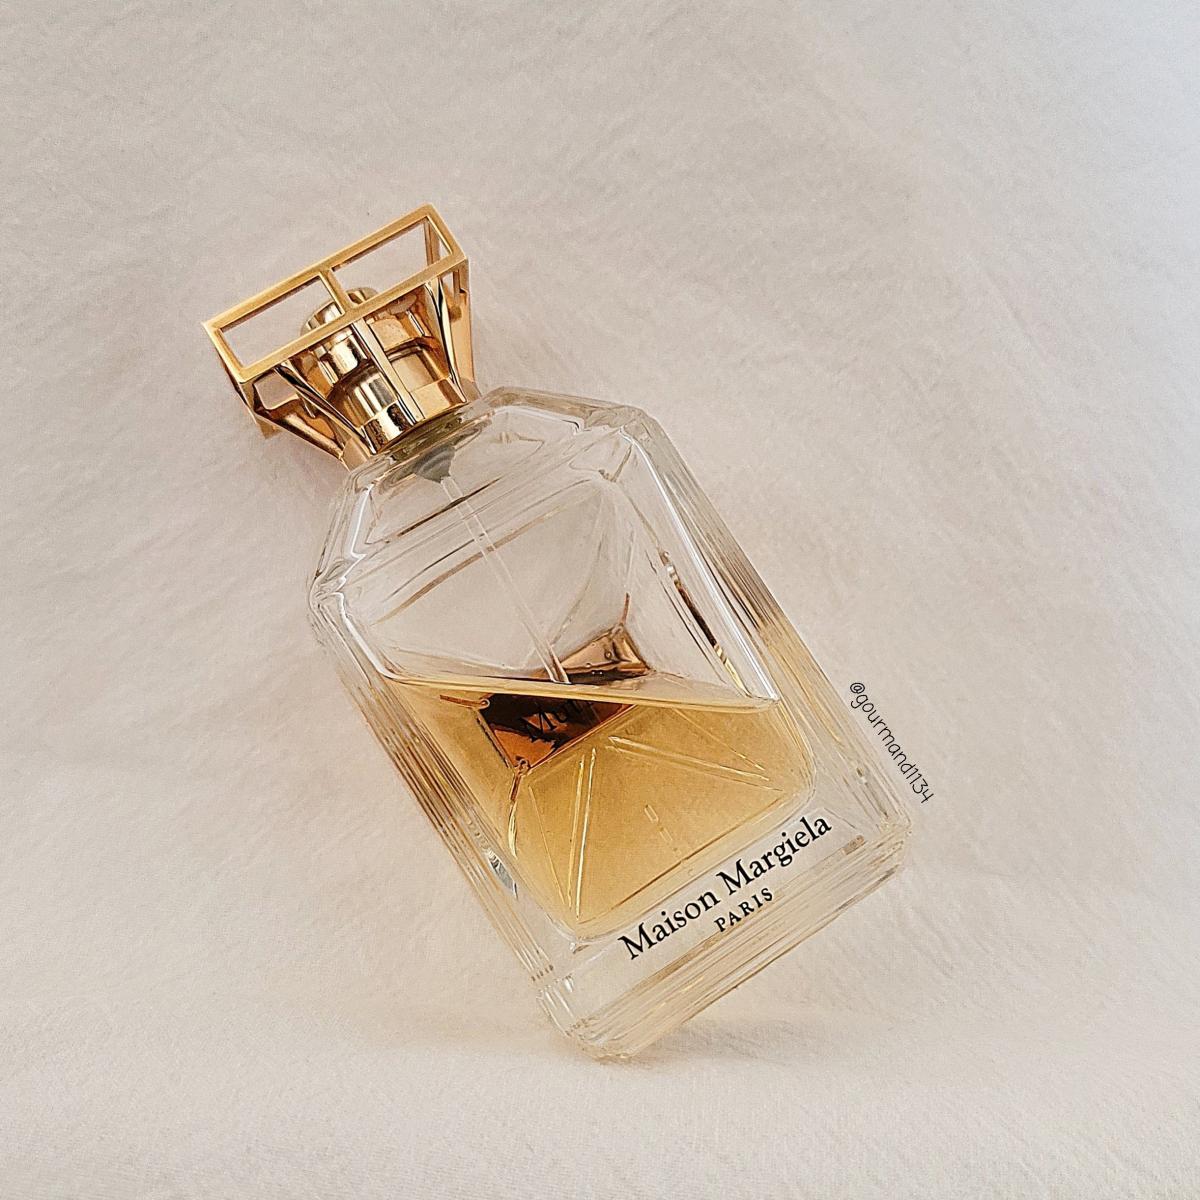 Mutiny Maison Martin Margiela perfume - a fragrance for women and men 2018